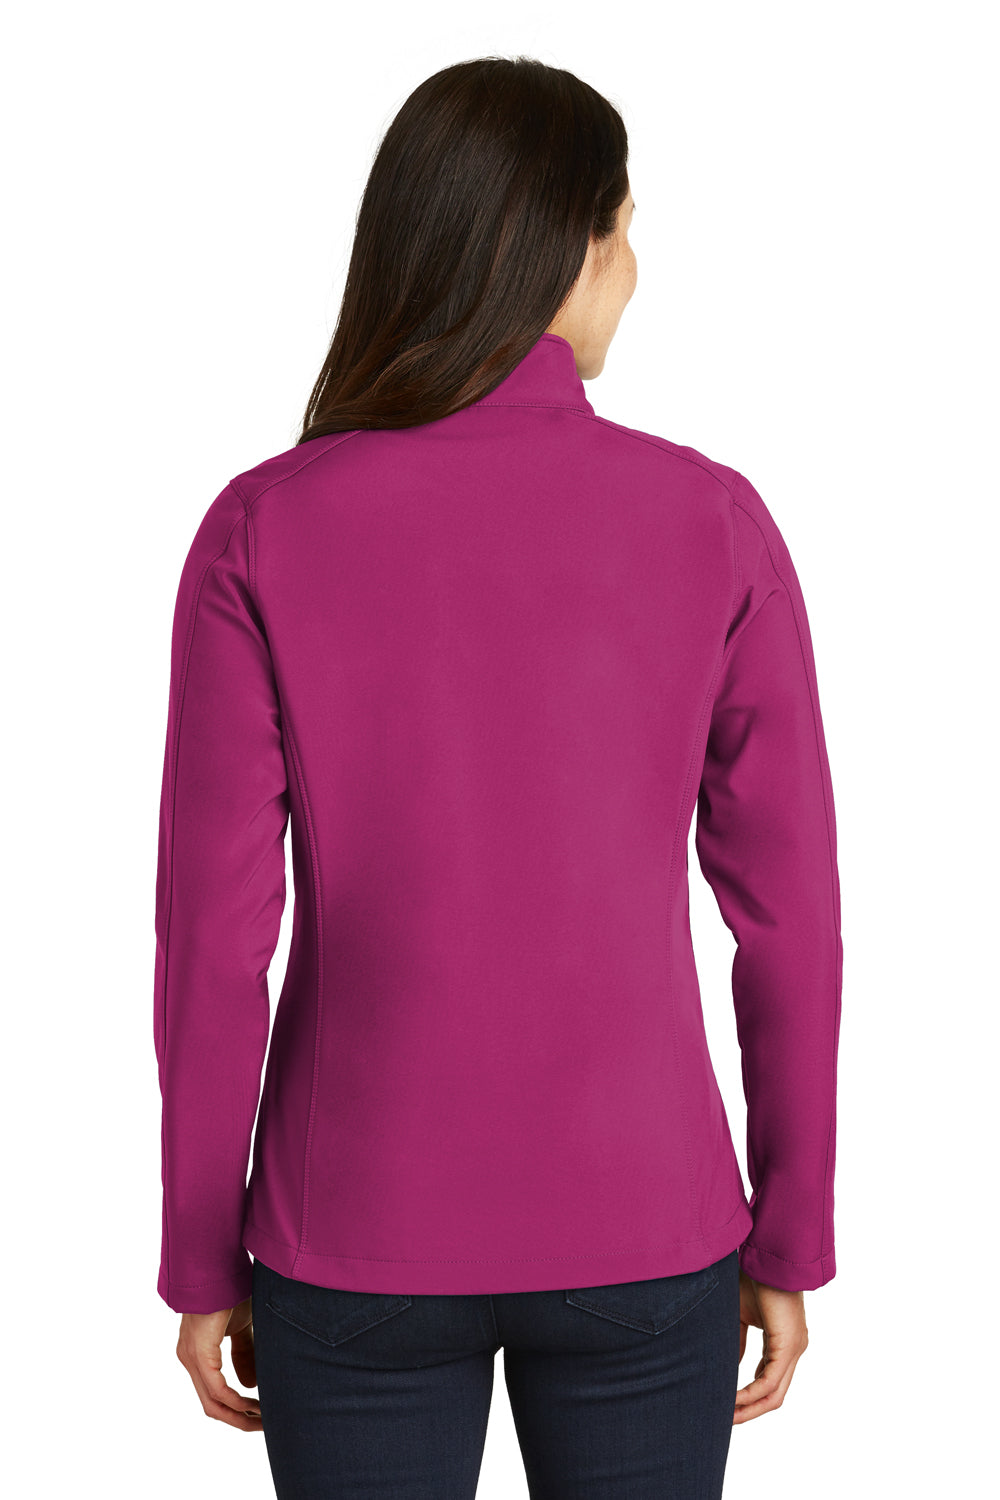 Port Authority L317 Womens Core Wind & Water Resistant Full Zip Jacket Berry Purple Back